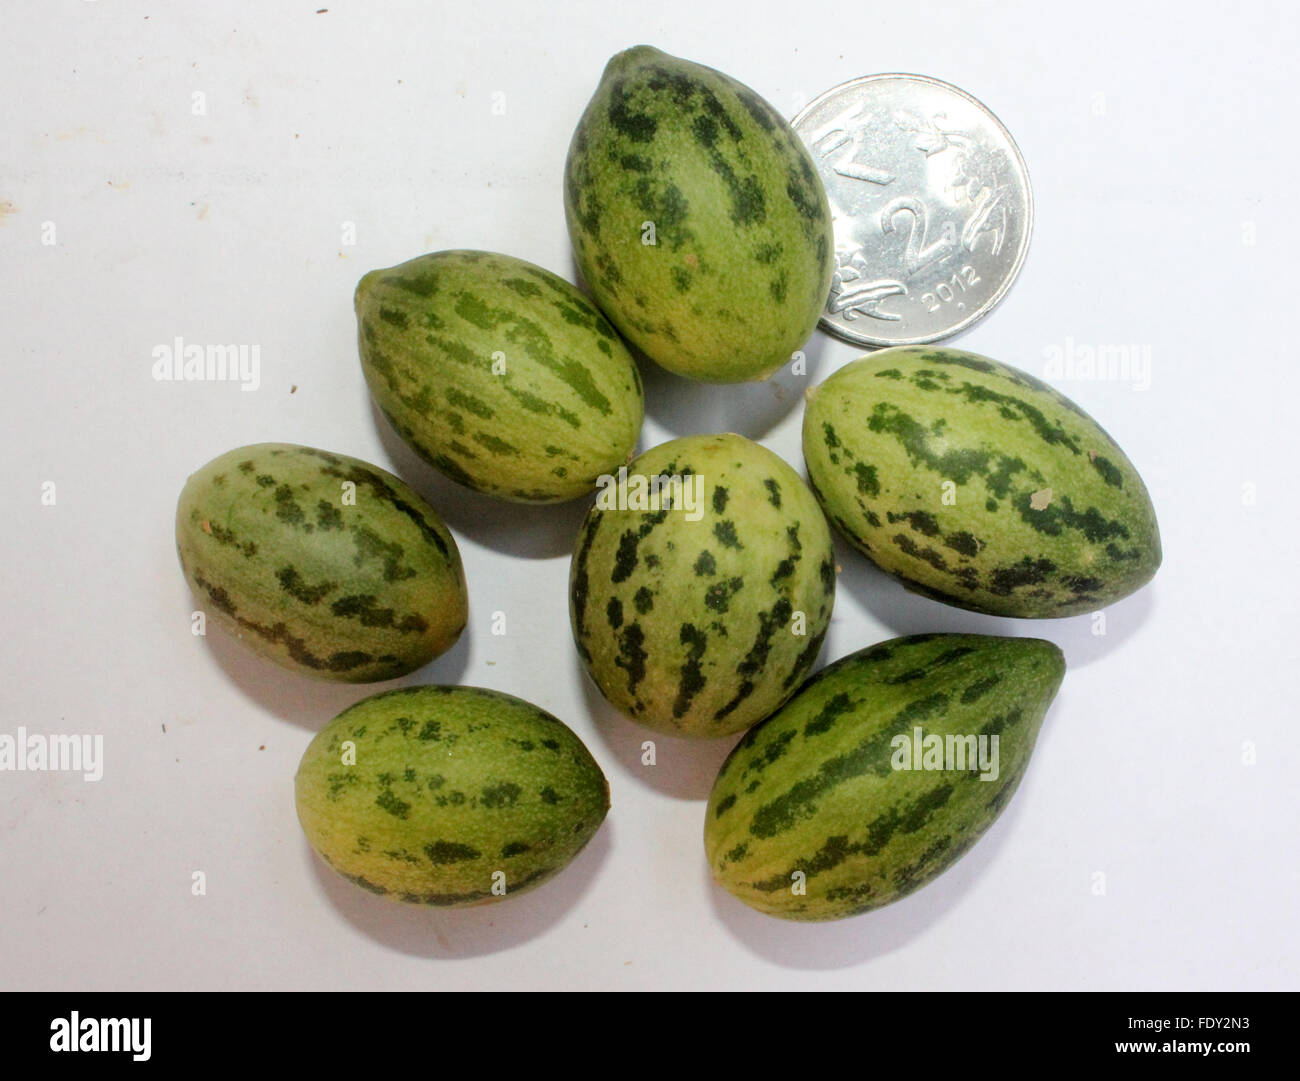 Wild Melon, Cucumis Melo Var Agrestis, Obst Abschnitt Chhoti Kachri, ovale Frucht, grüne Haut, dunkle grüne Flecken, blasse grüne Fleisch Stockfoto